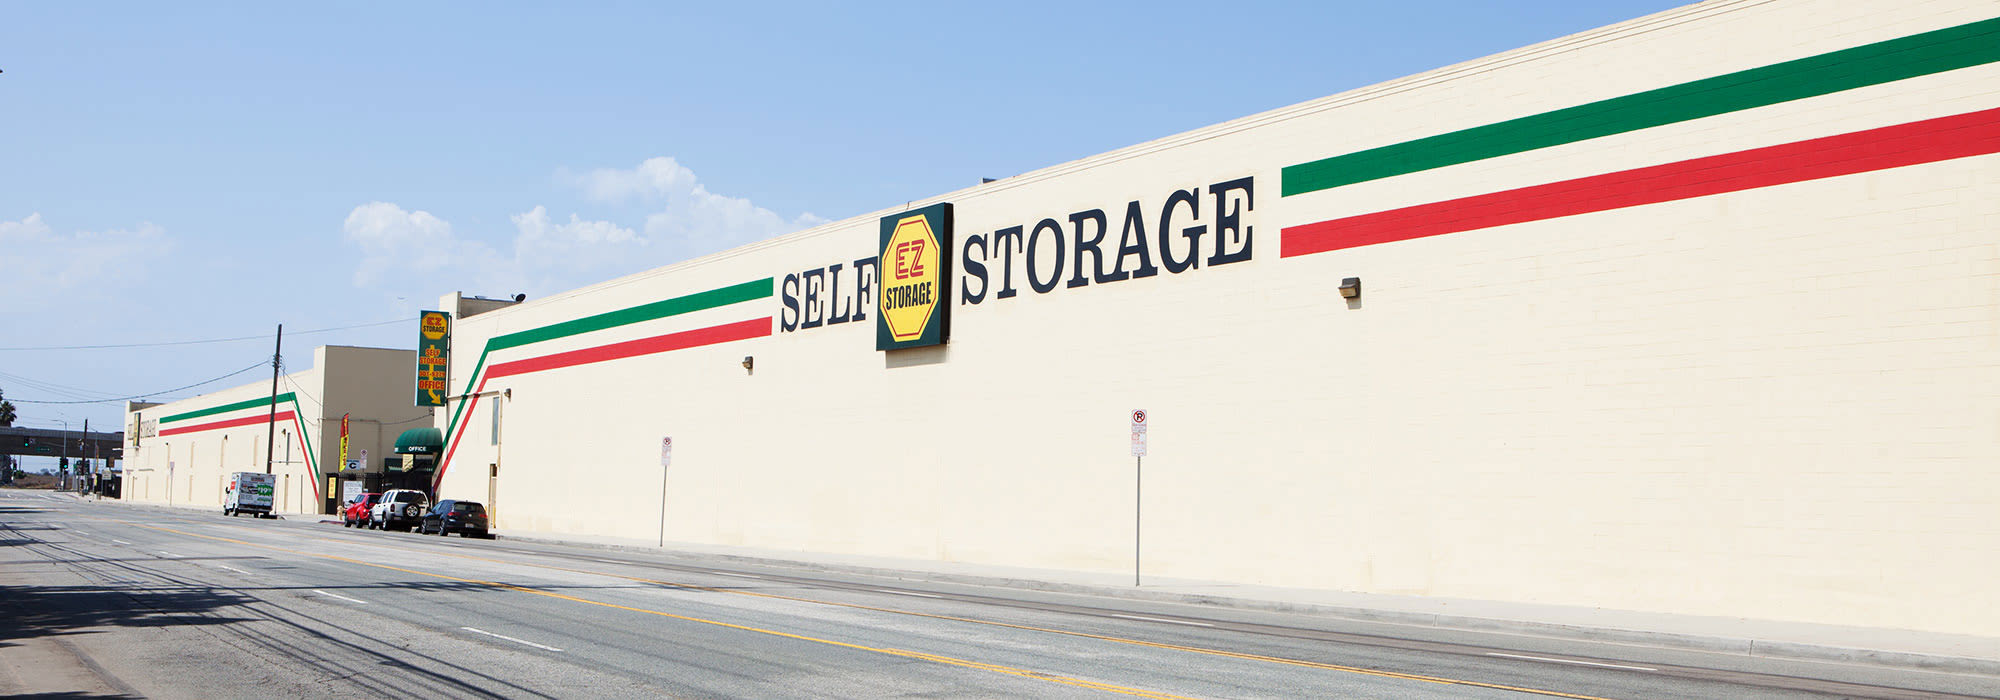 Self storage in Encino